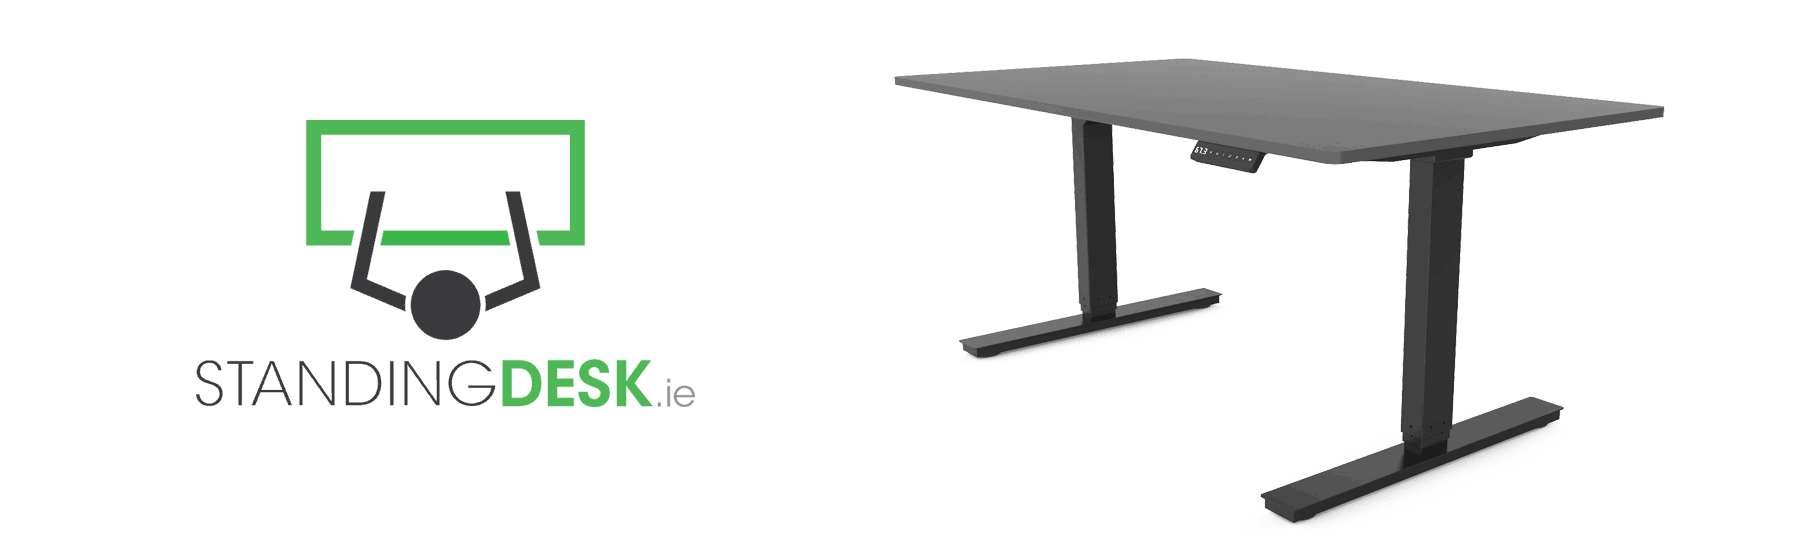 Standing Desk logo and motorized height adjustable desk